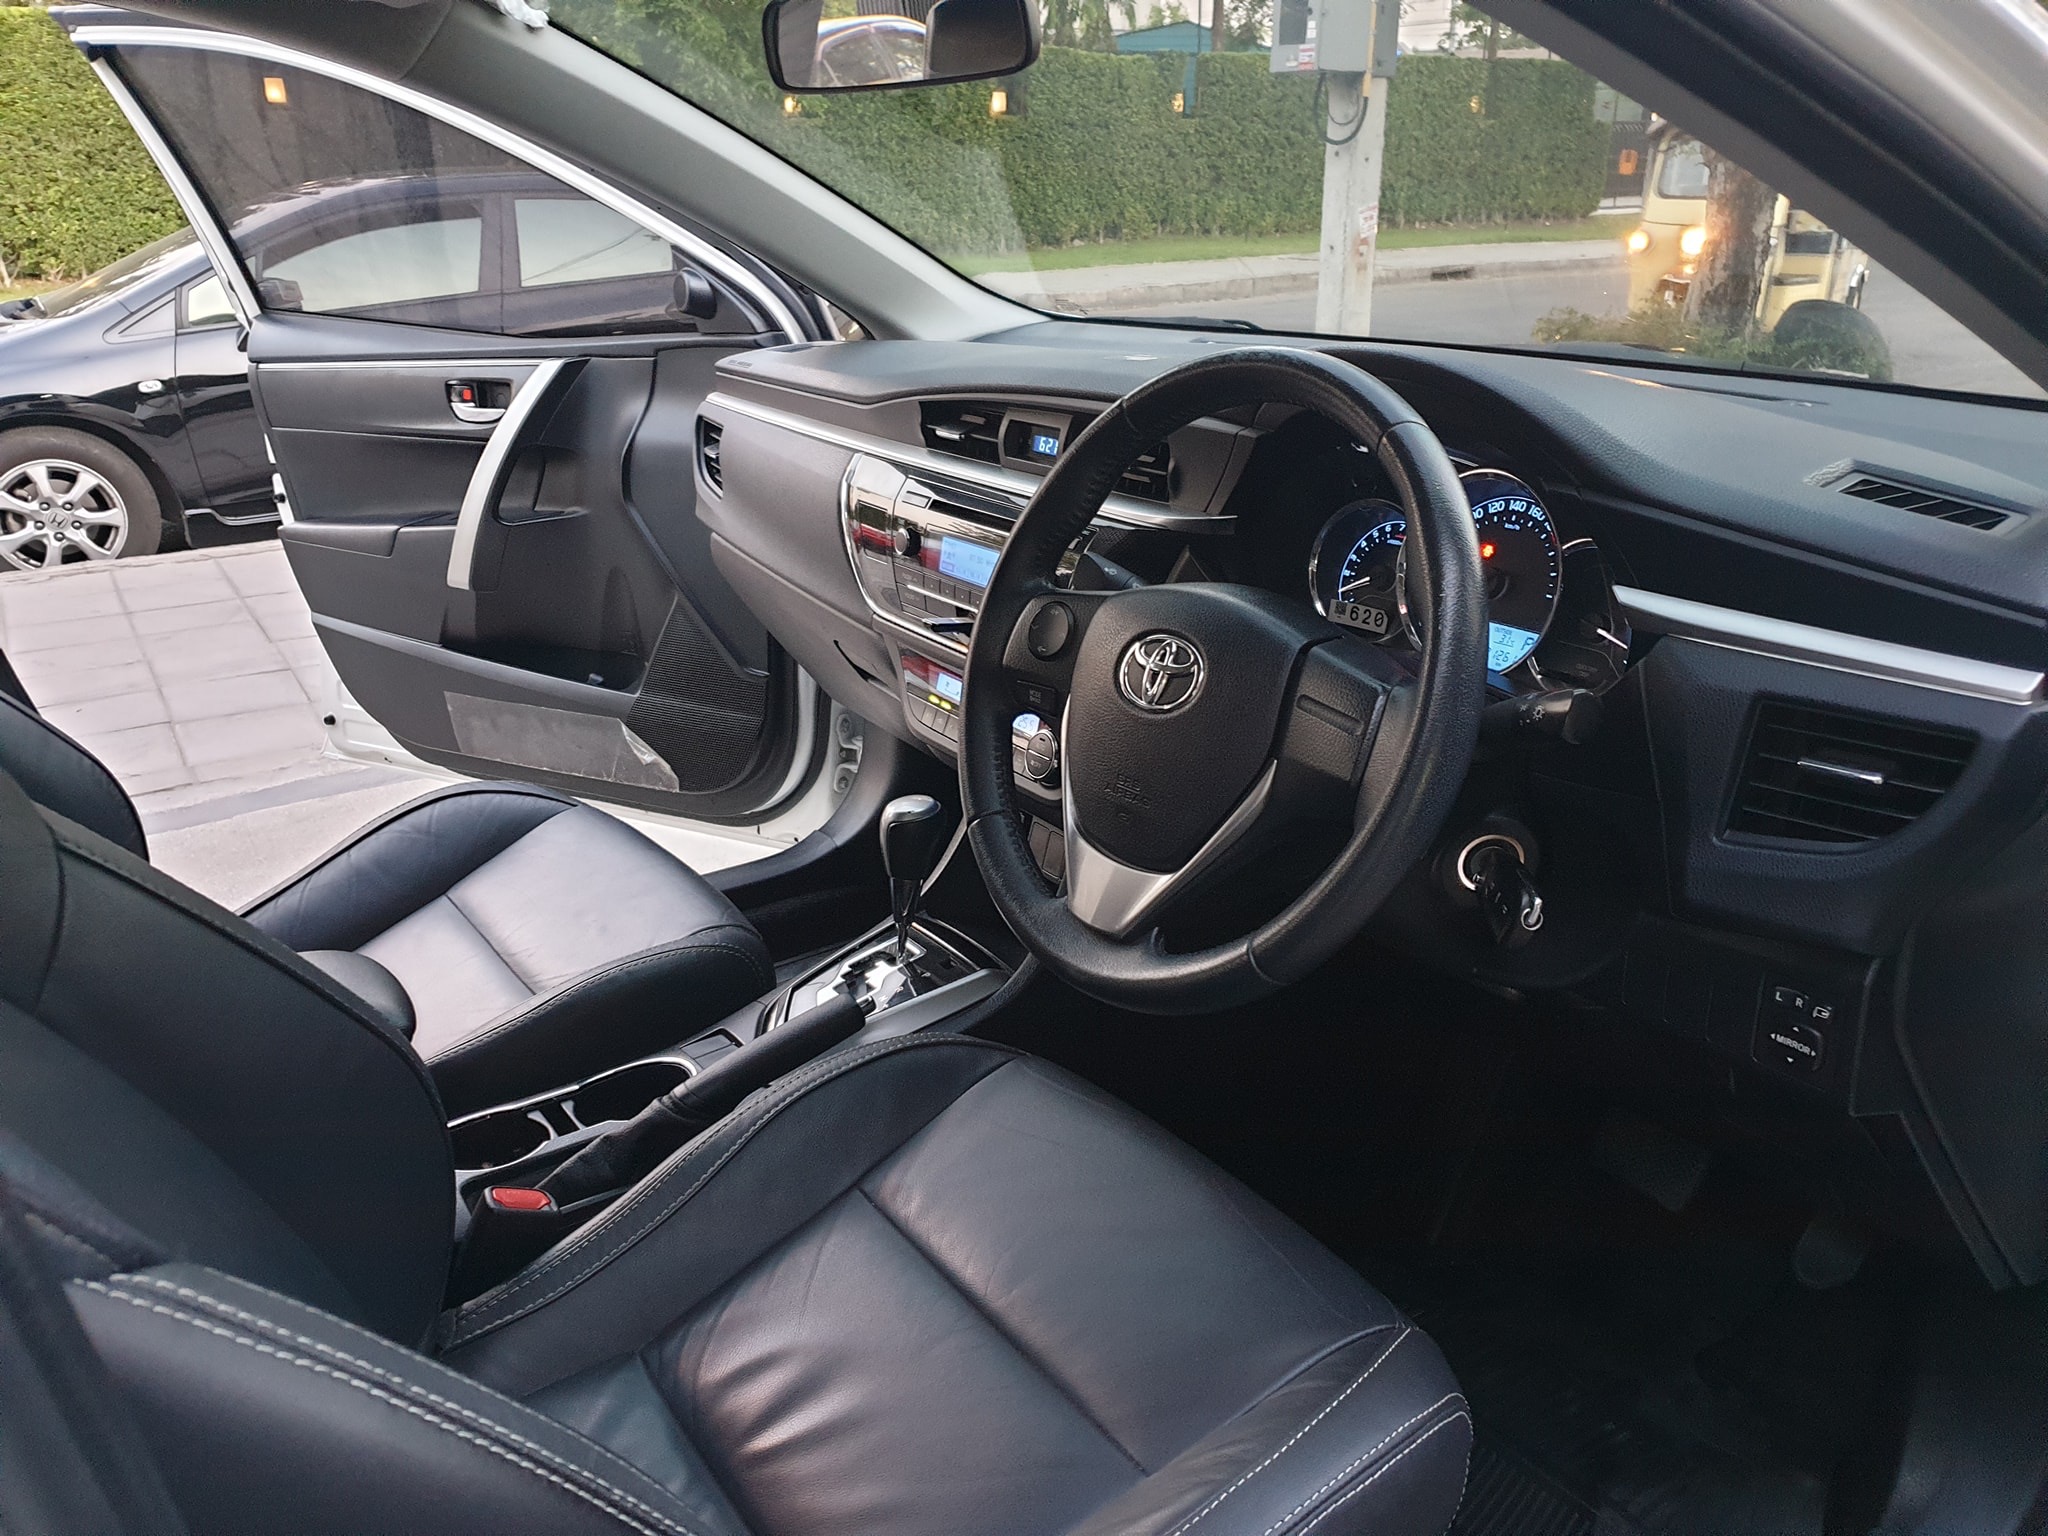 Toyota Corolla Altis ปี 2015 สีขาว